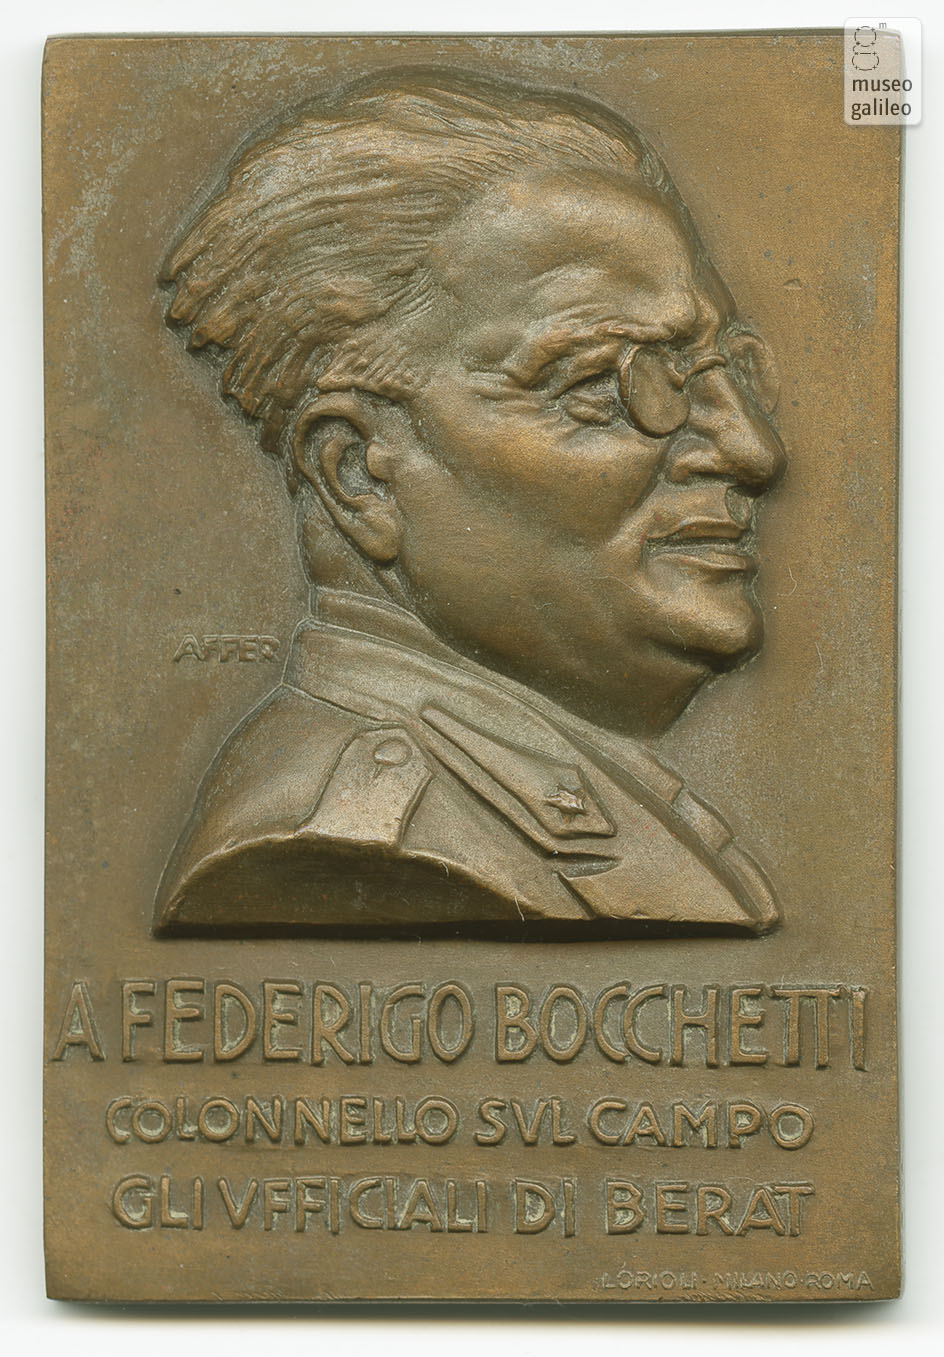 Federigo Bocchetti - obverse